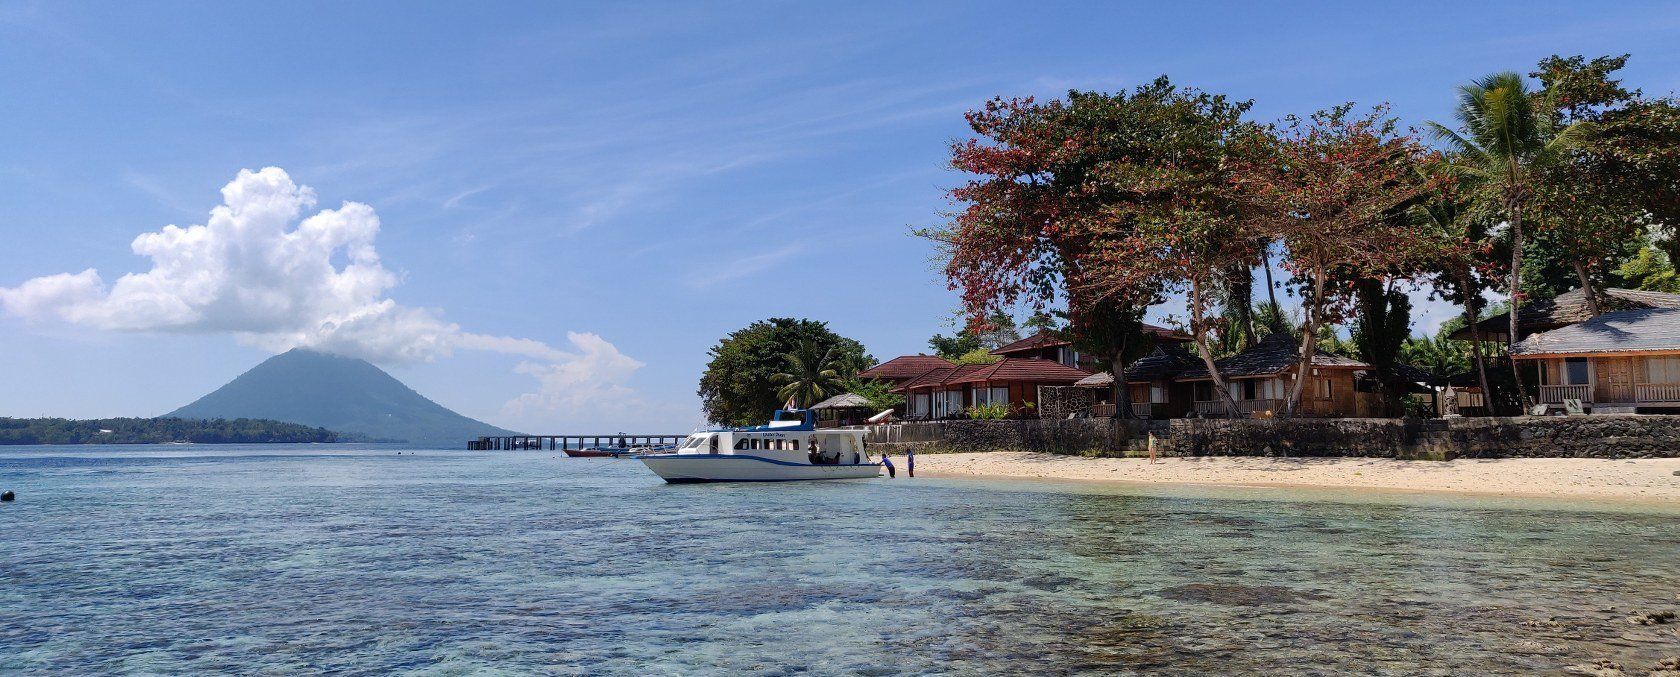 Sulawesi Siladen Insel mit Manado Tua